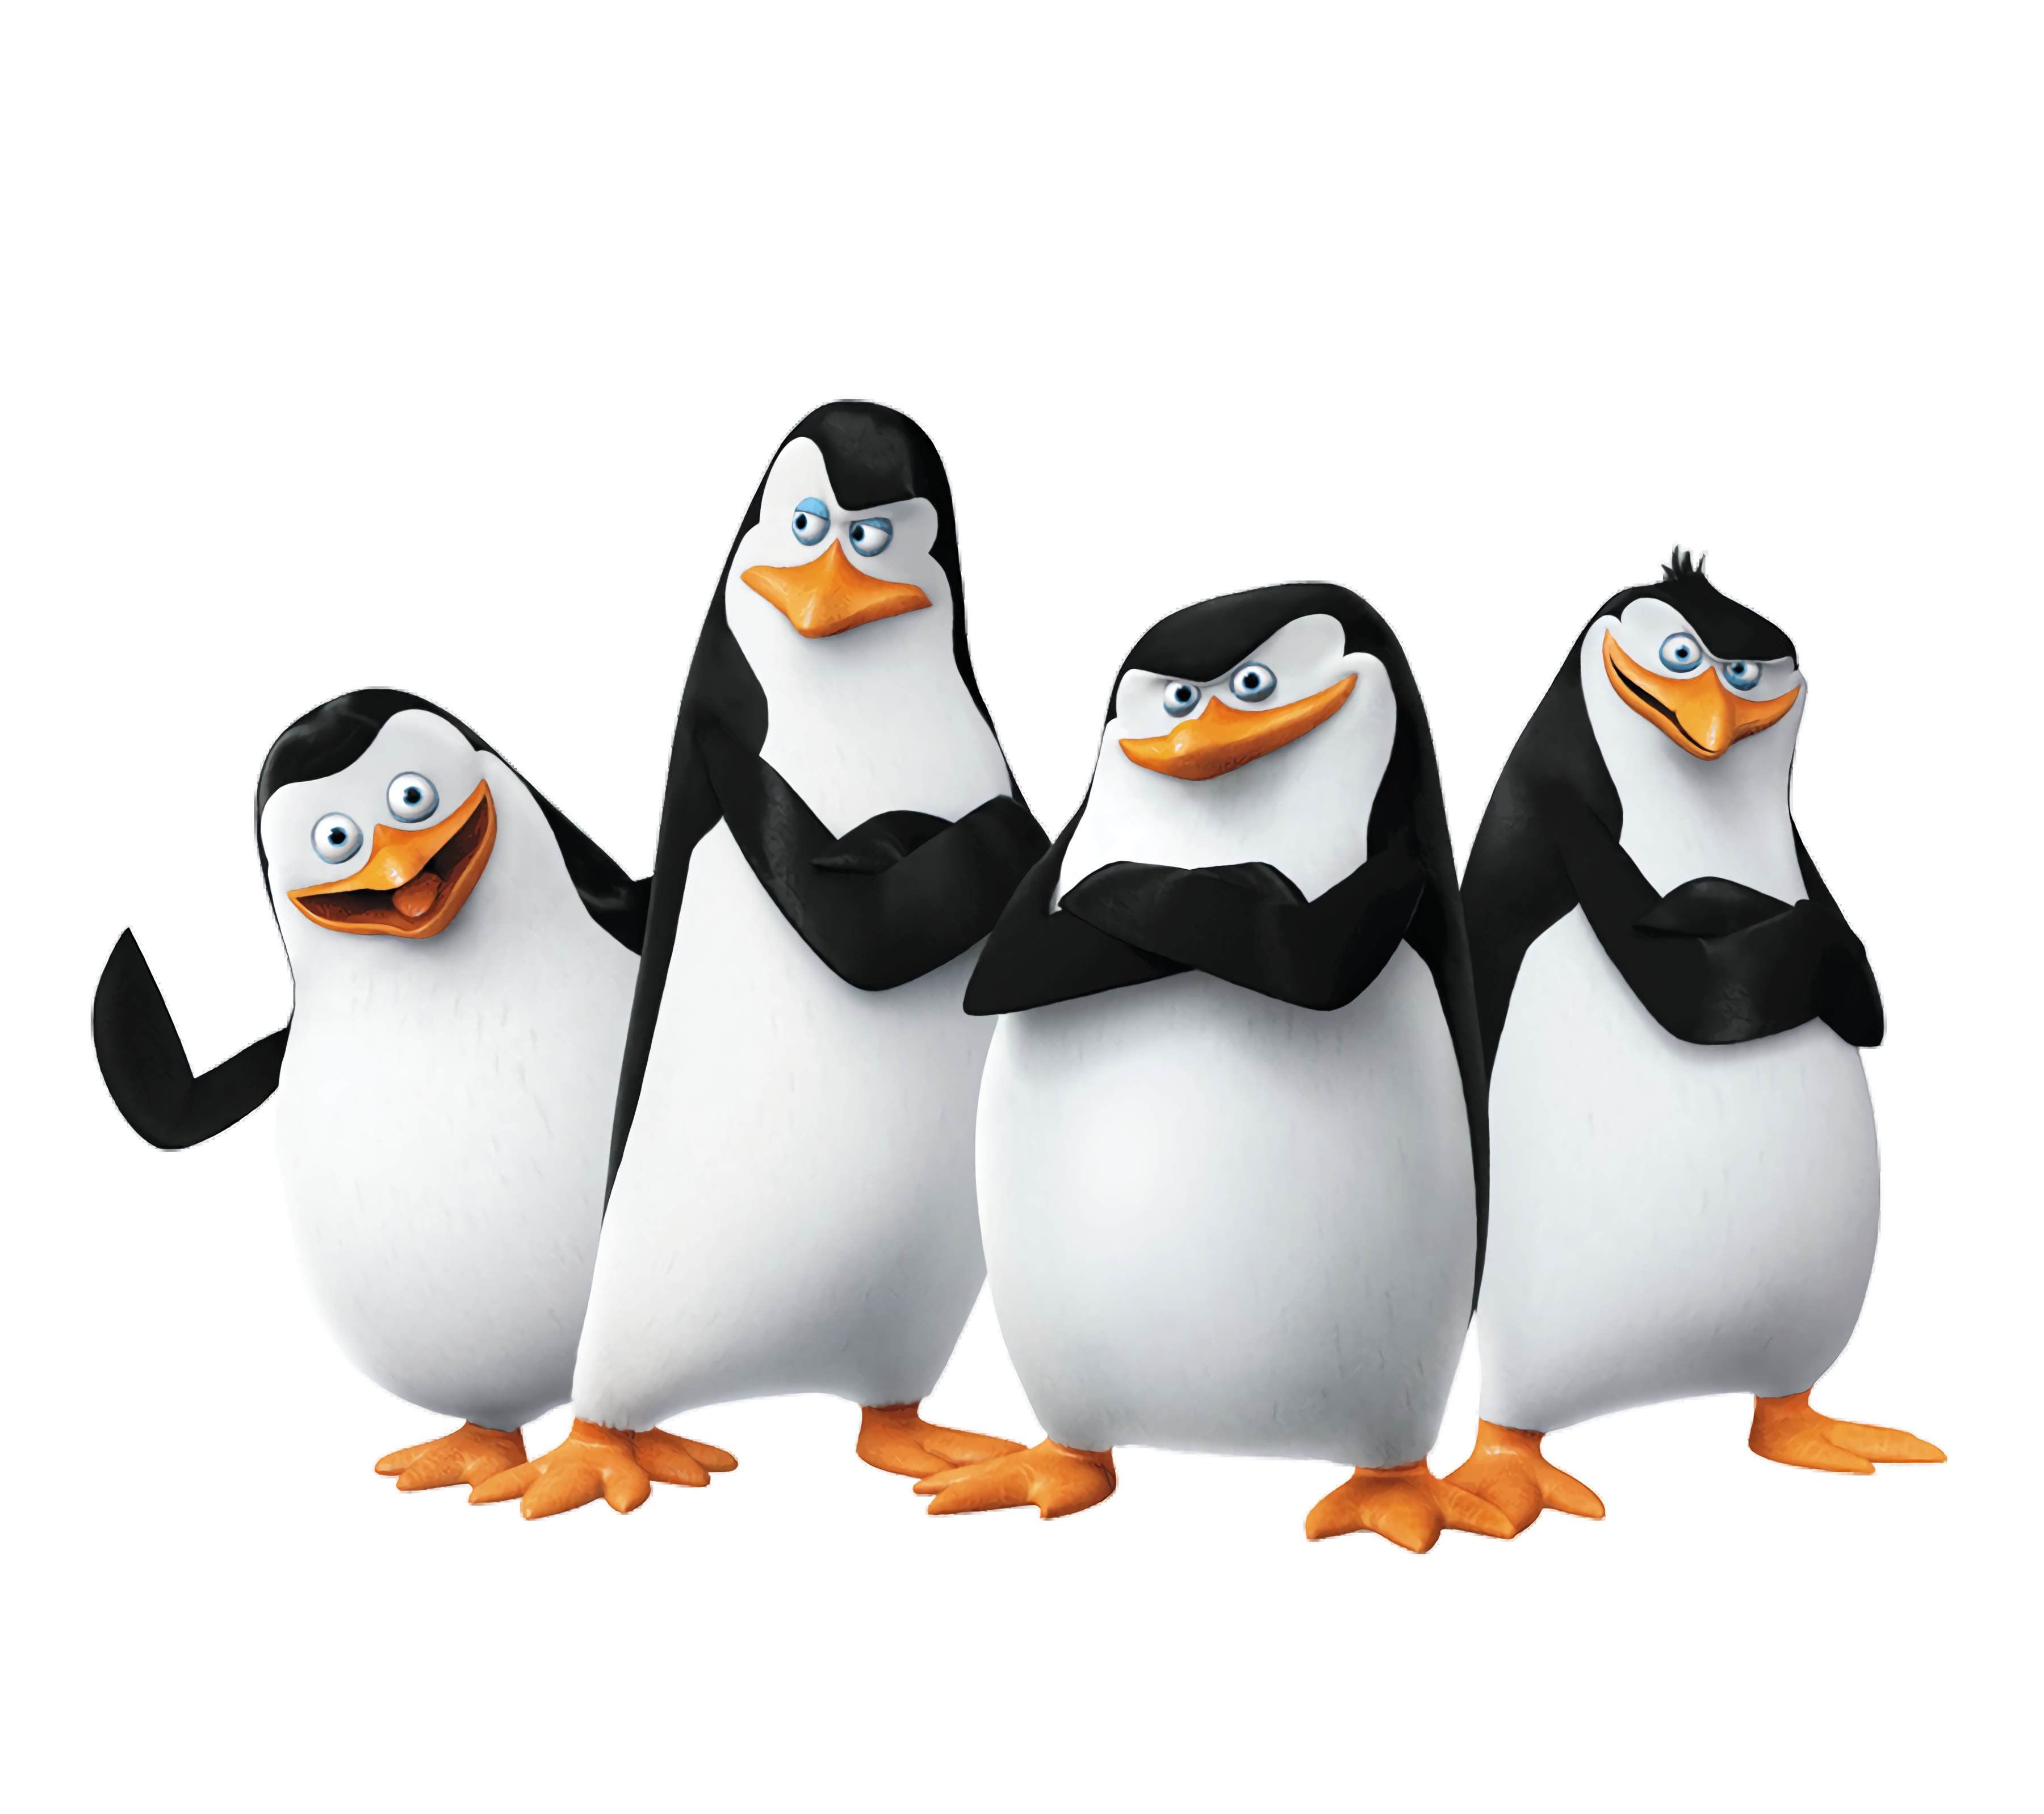 Penguin Games